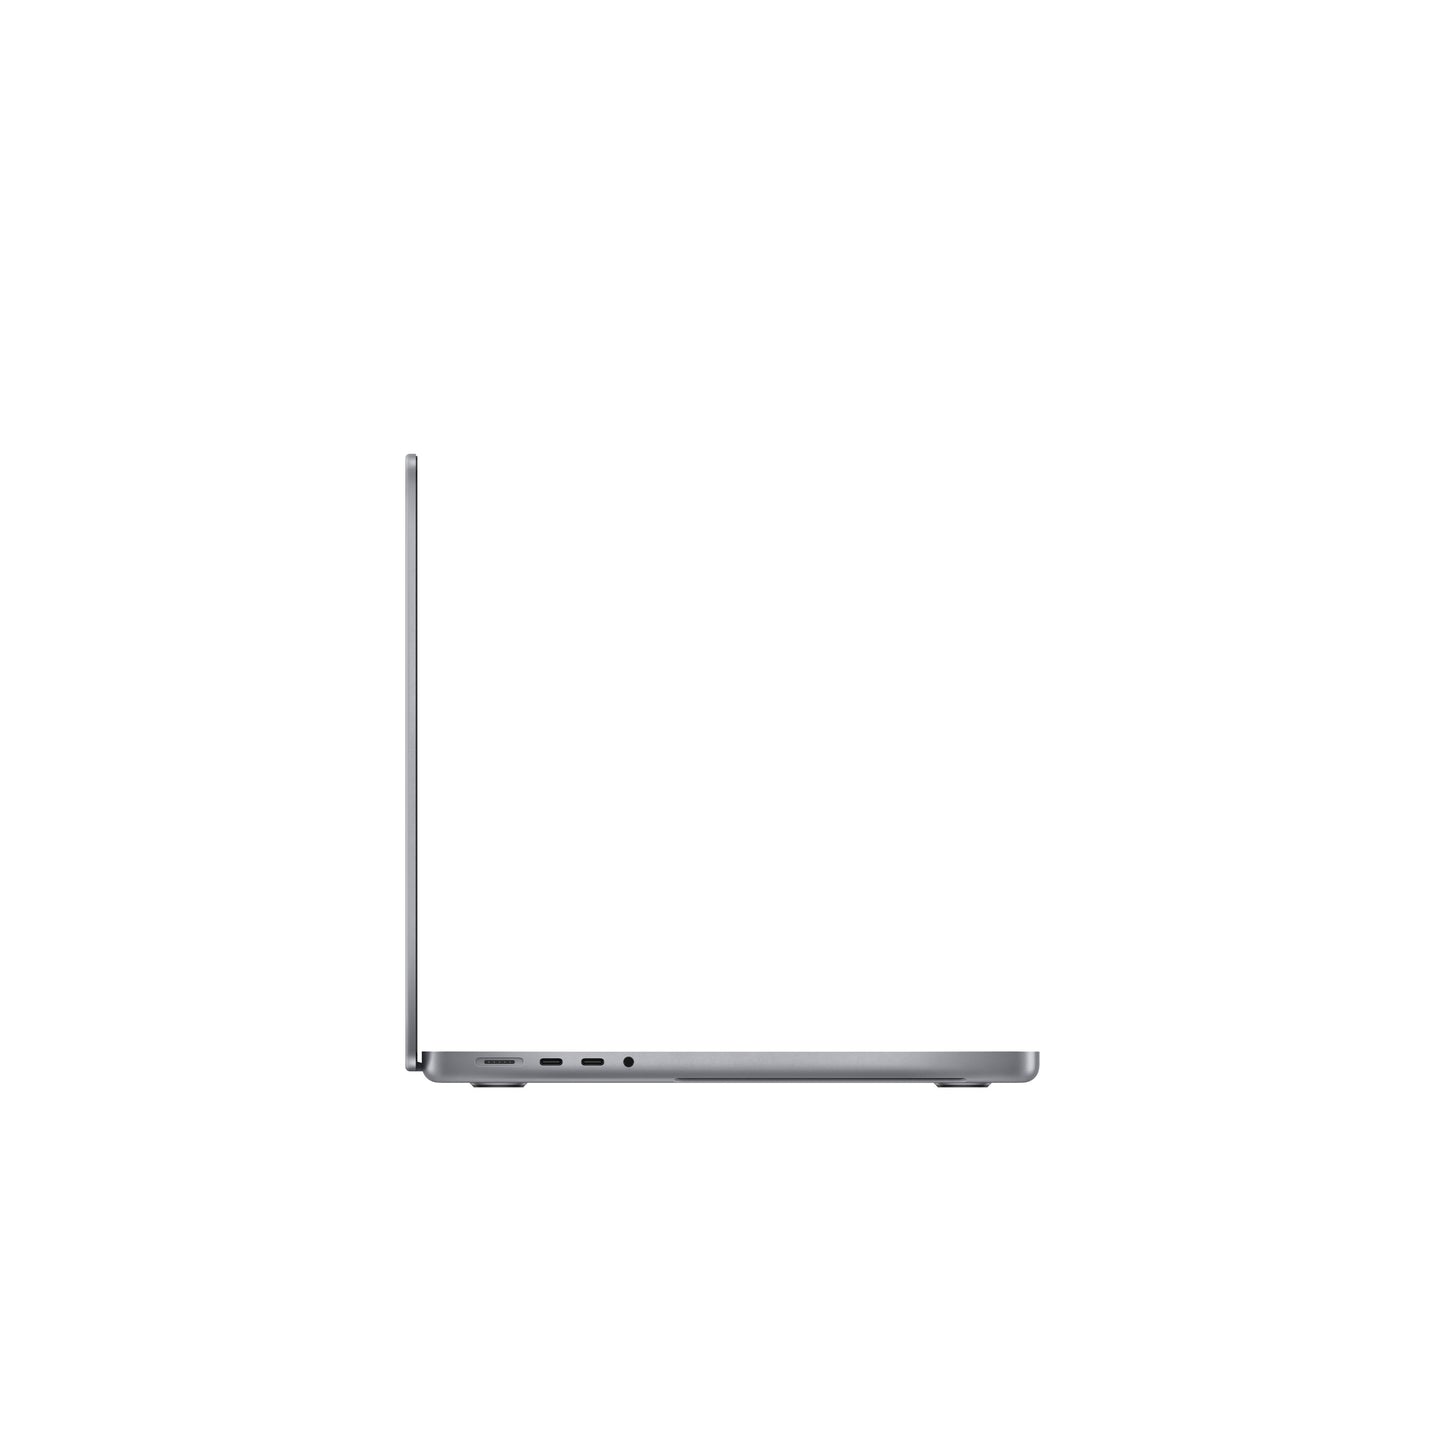 MacBook Pro con Chip M1 en www.mac-center.com